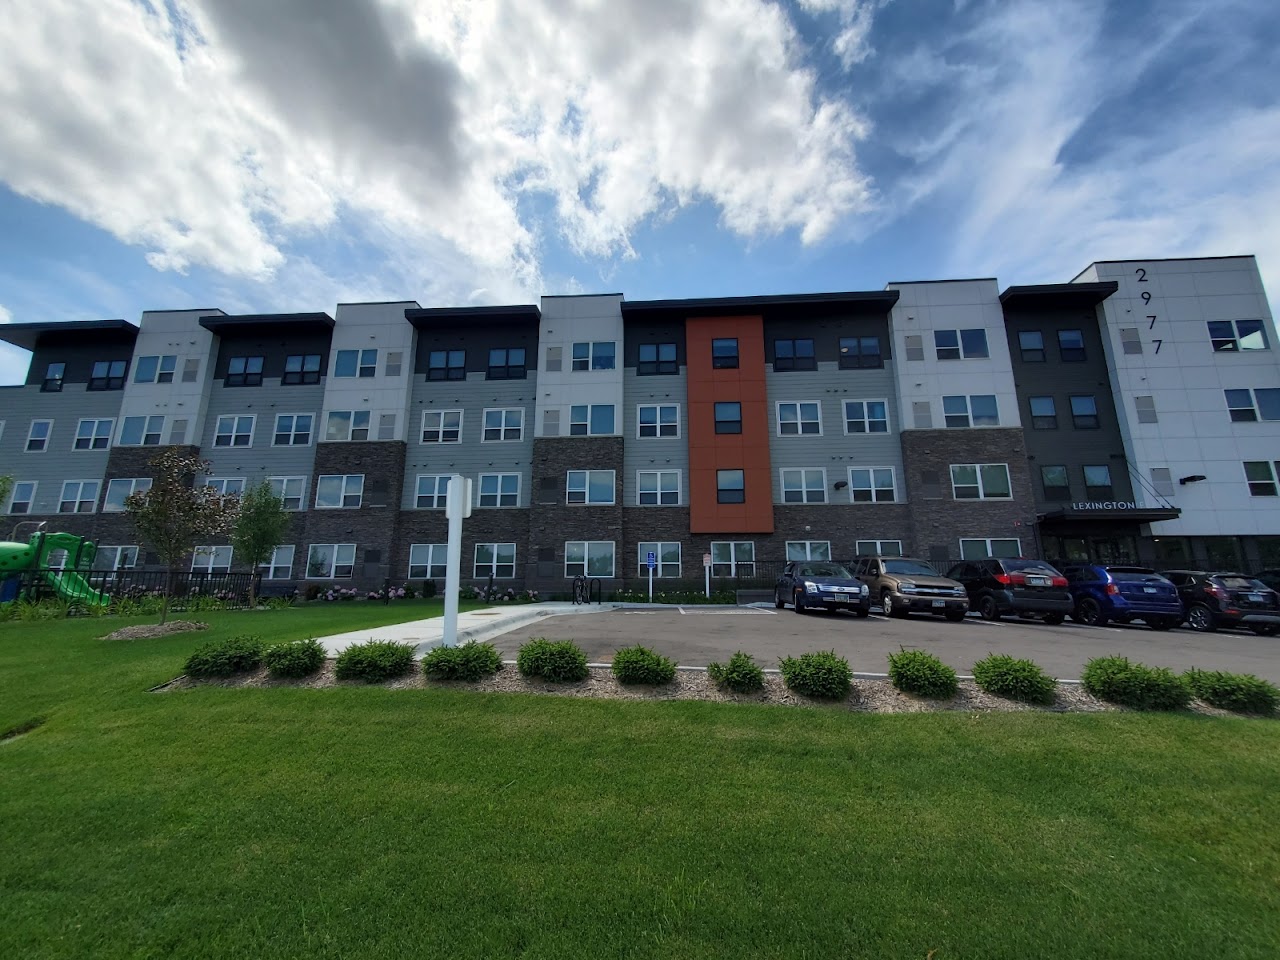 Photo of LEXINGTON FLATS. Affordable housing located at 2977 LEXINGTON AVENUE SOUTH EAGAN, MN 55121